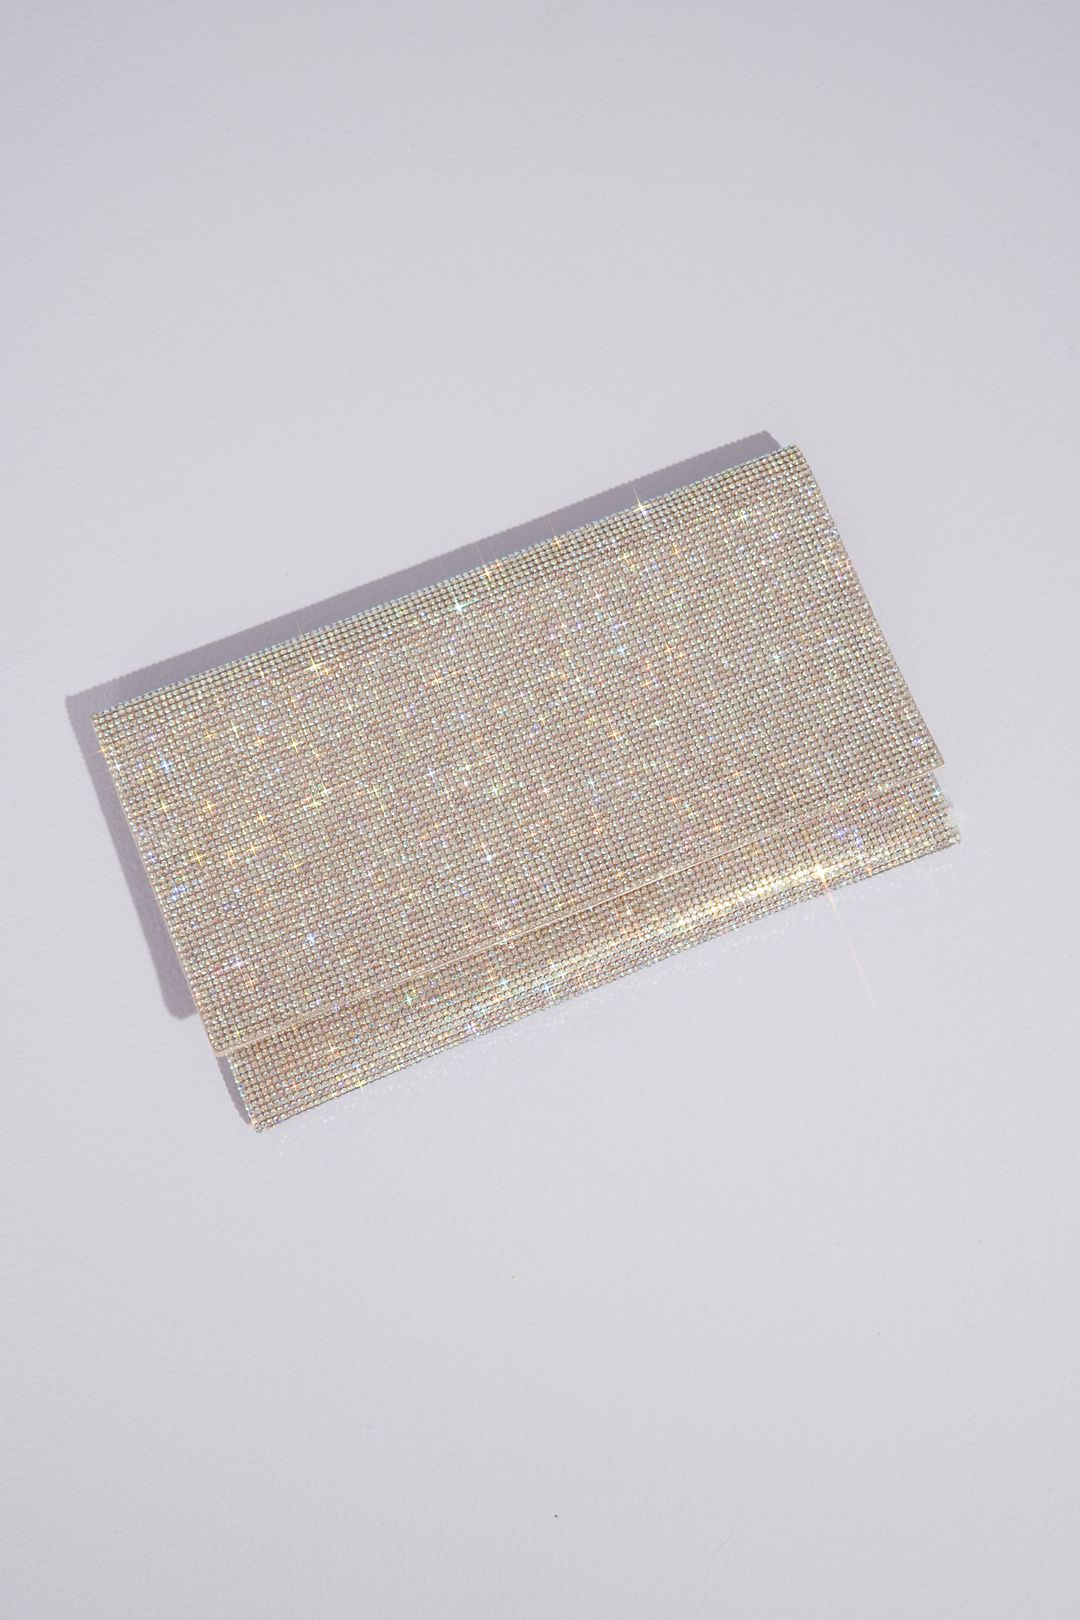 Allover Iridescent Crystal Envelope Clutch Image